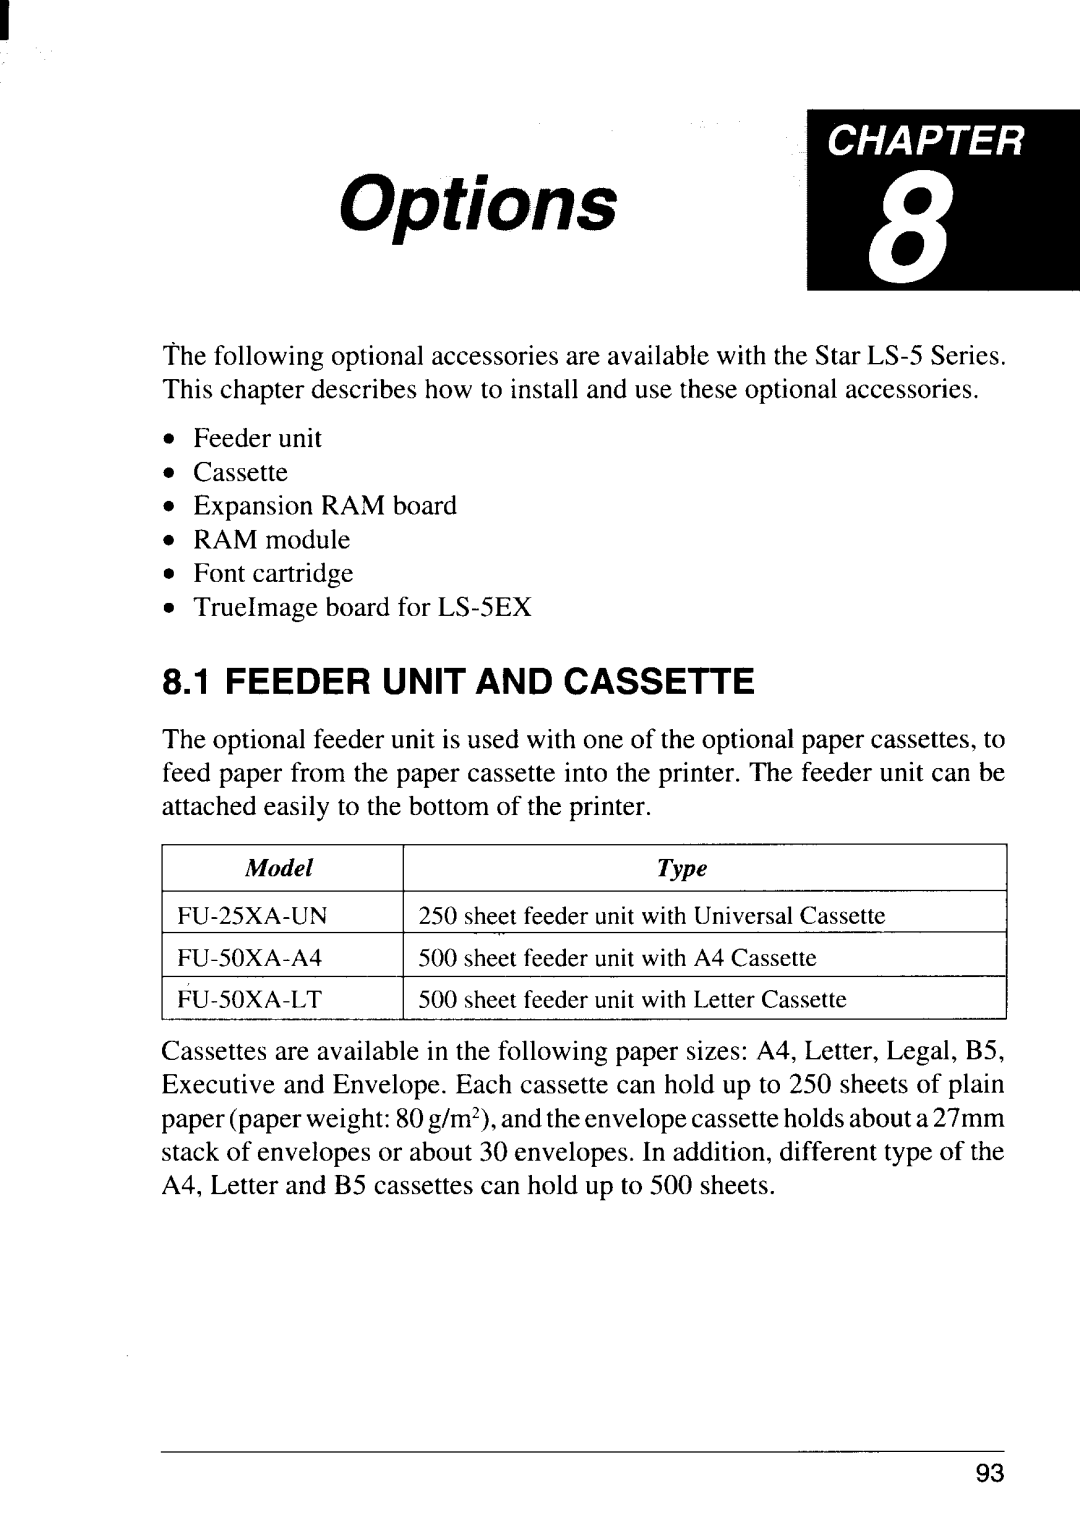 Star Micronics LS-5 TT, LS-5 EX operation manual Options Am, Feeder Unit And Cassette 